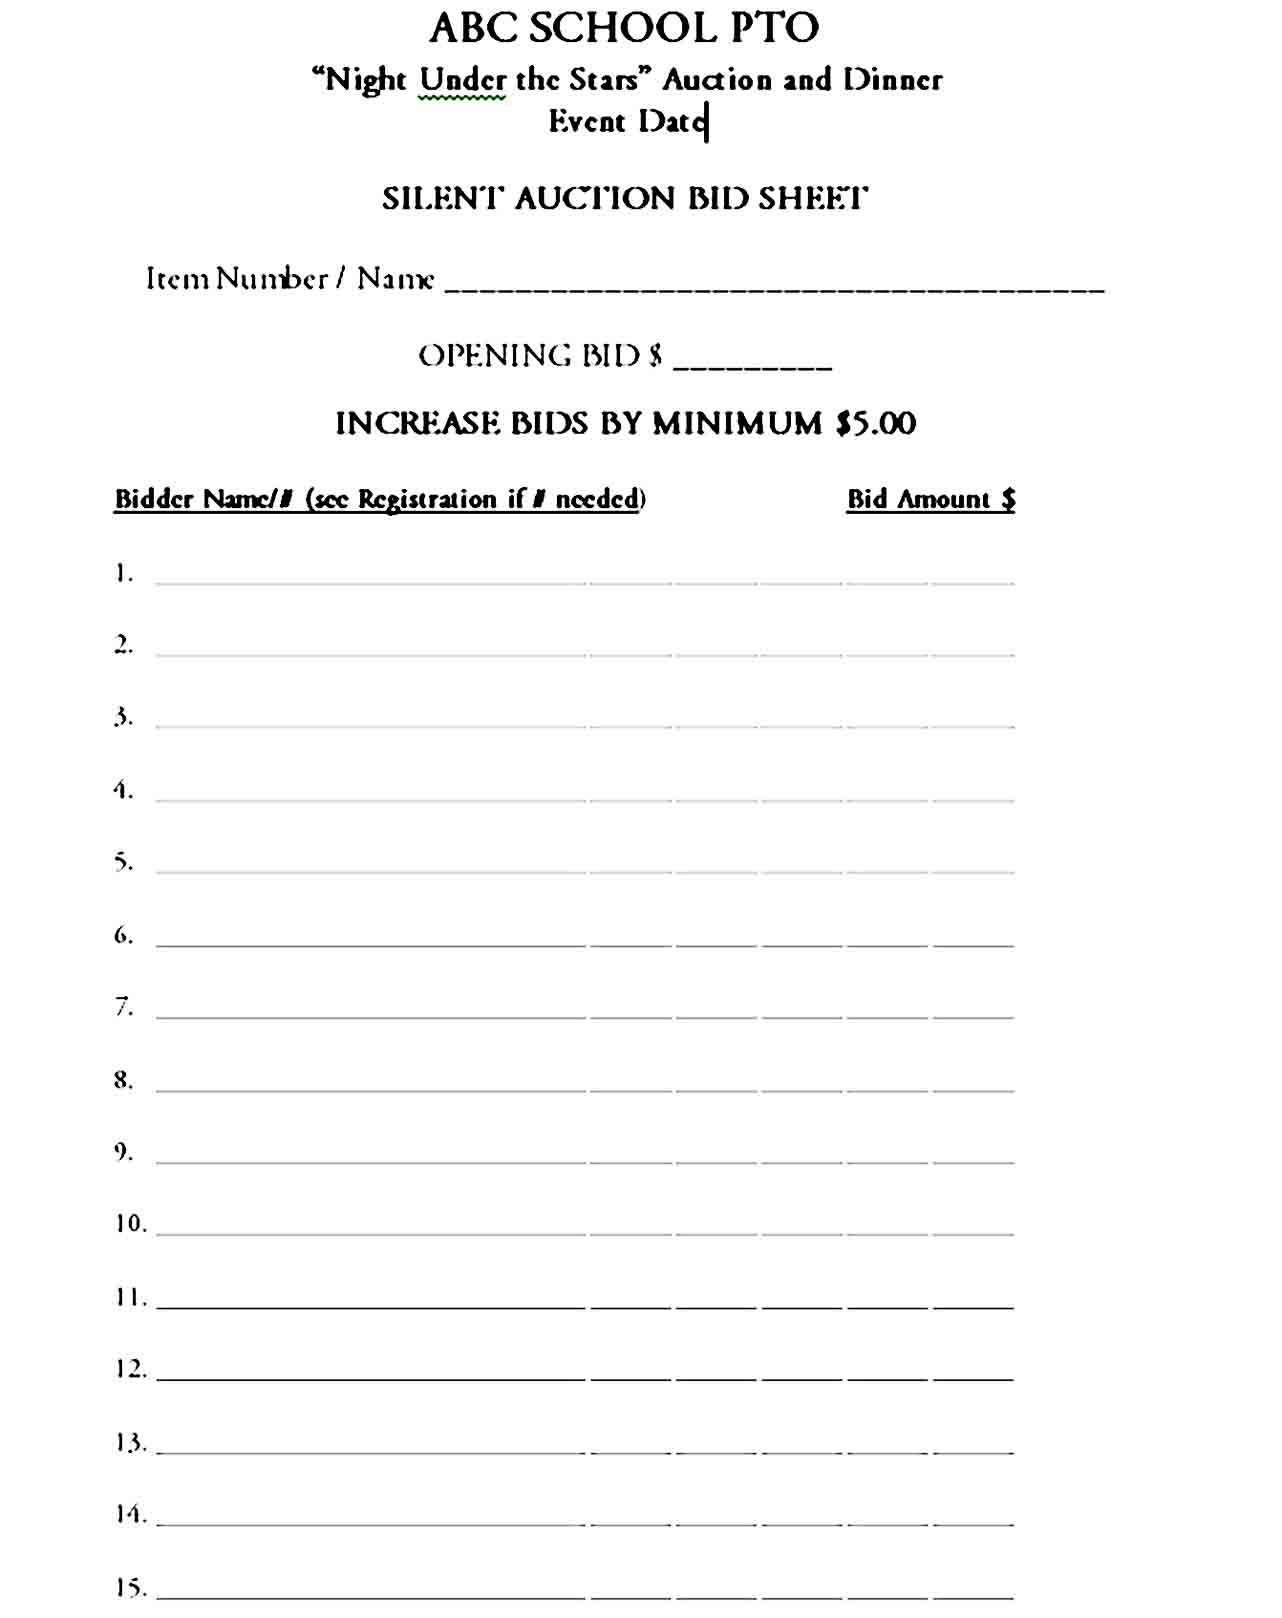 Silent Auction Bid Sheet 04